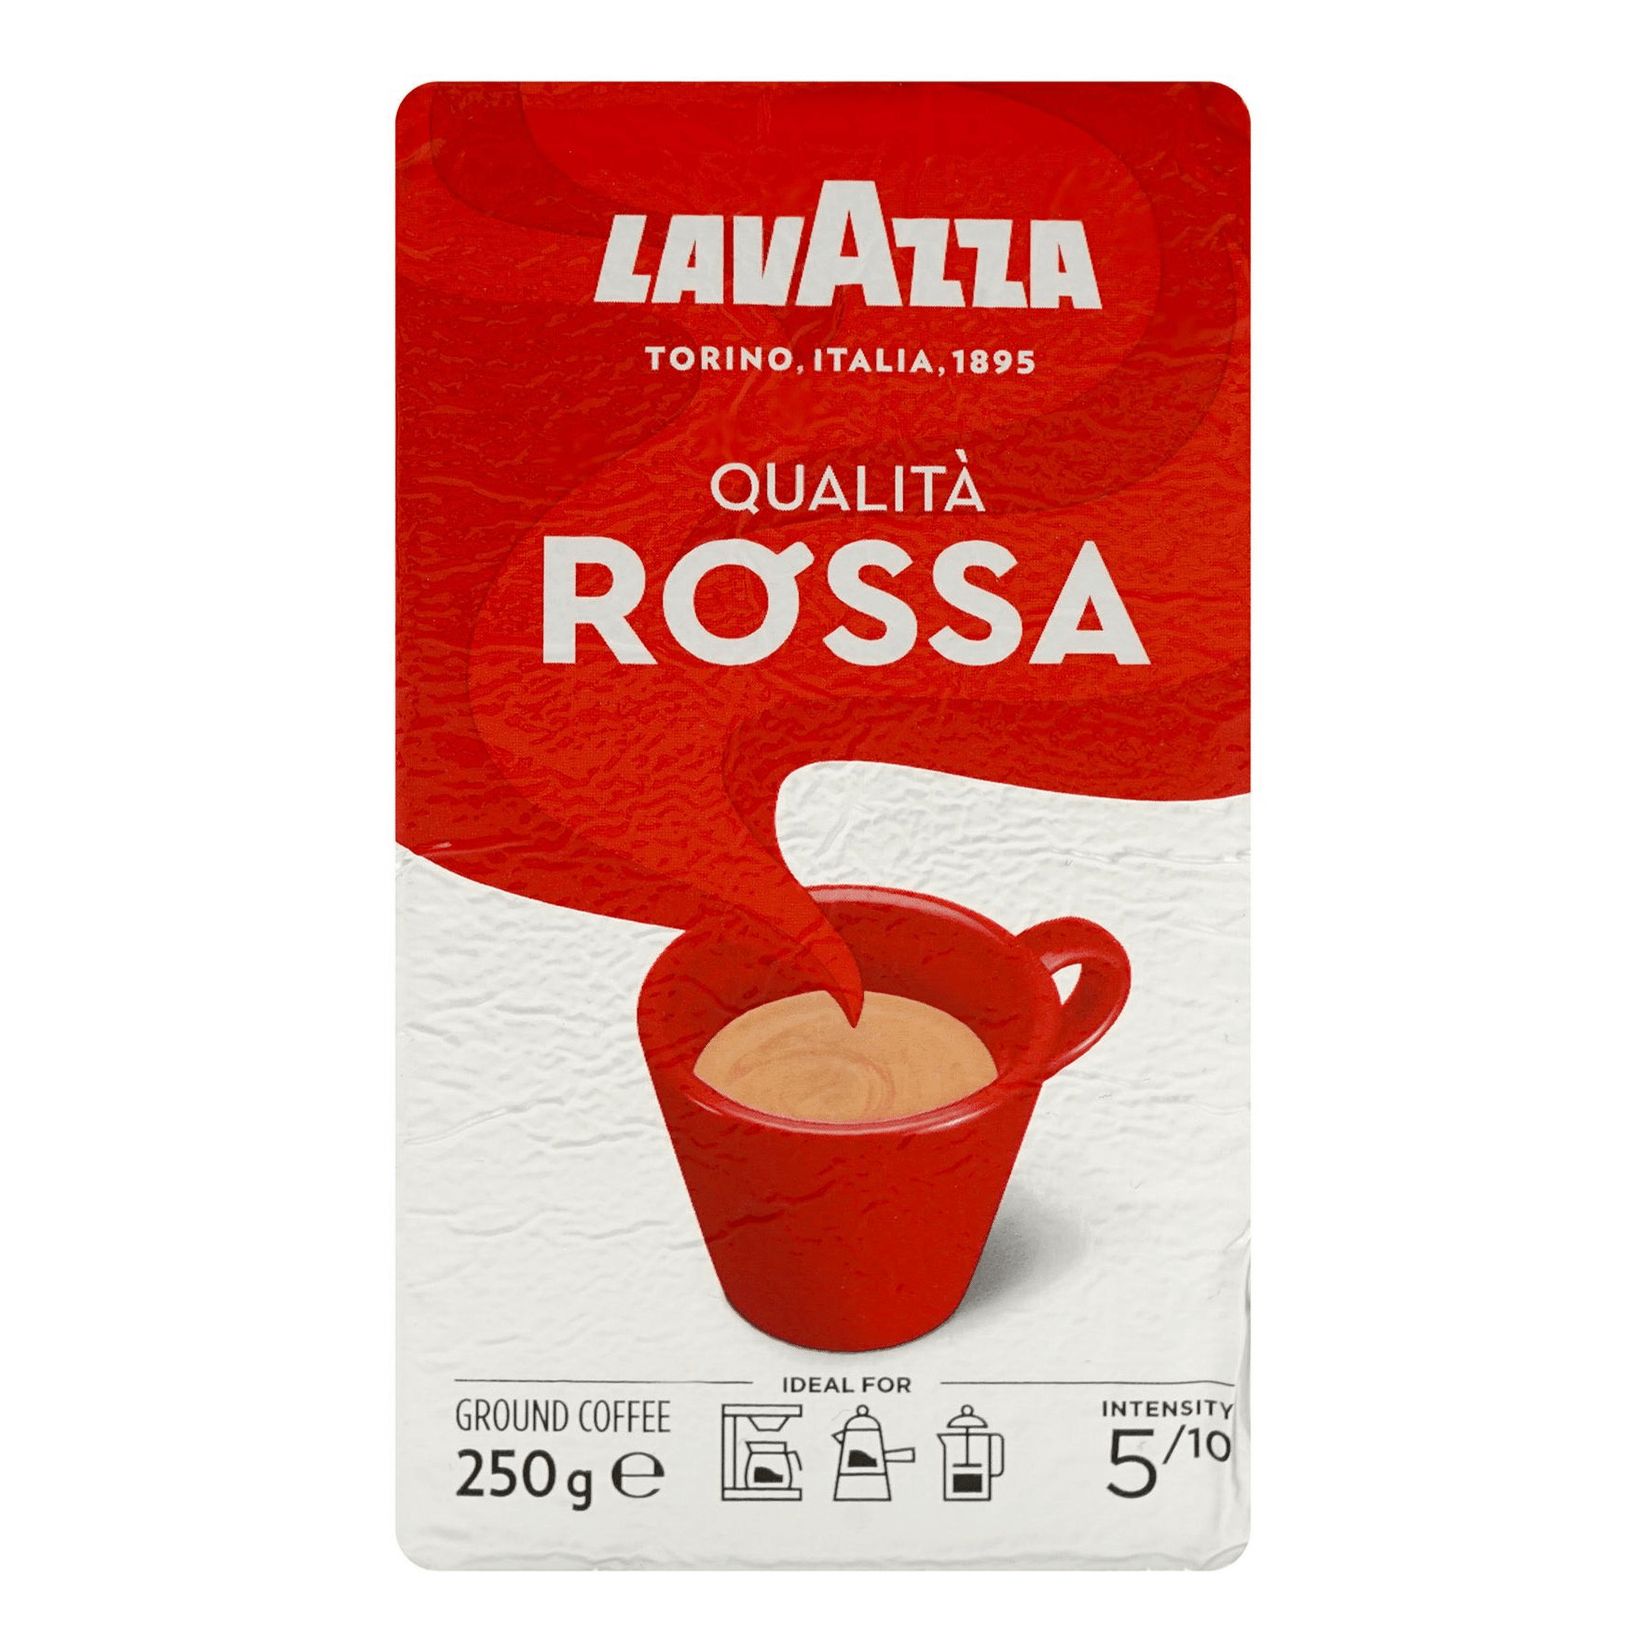 Кофе lavazza 250 г. Lavazza qualita Rossa 250 молотый. Lavazza qualita Rossa кофе молотый 250. Кофе Lavazza Rossa, молотый, 250 г. Lavazza qualita Rossa кофе молотый 250 г.